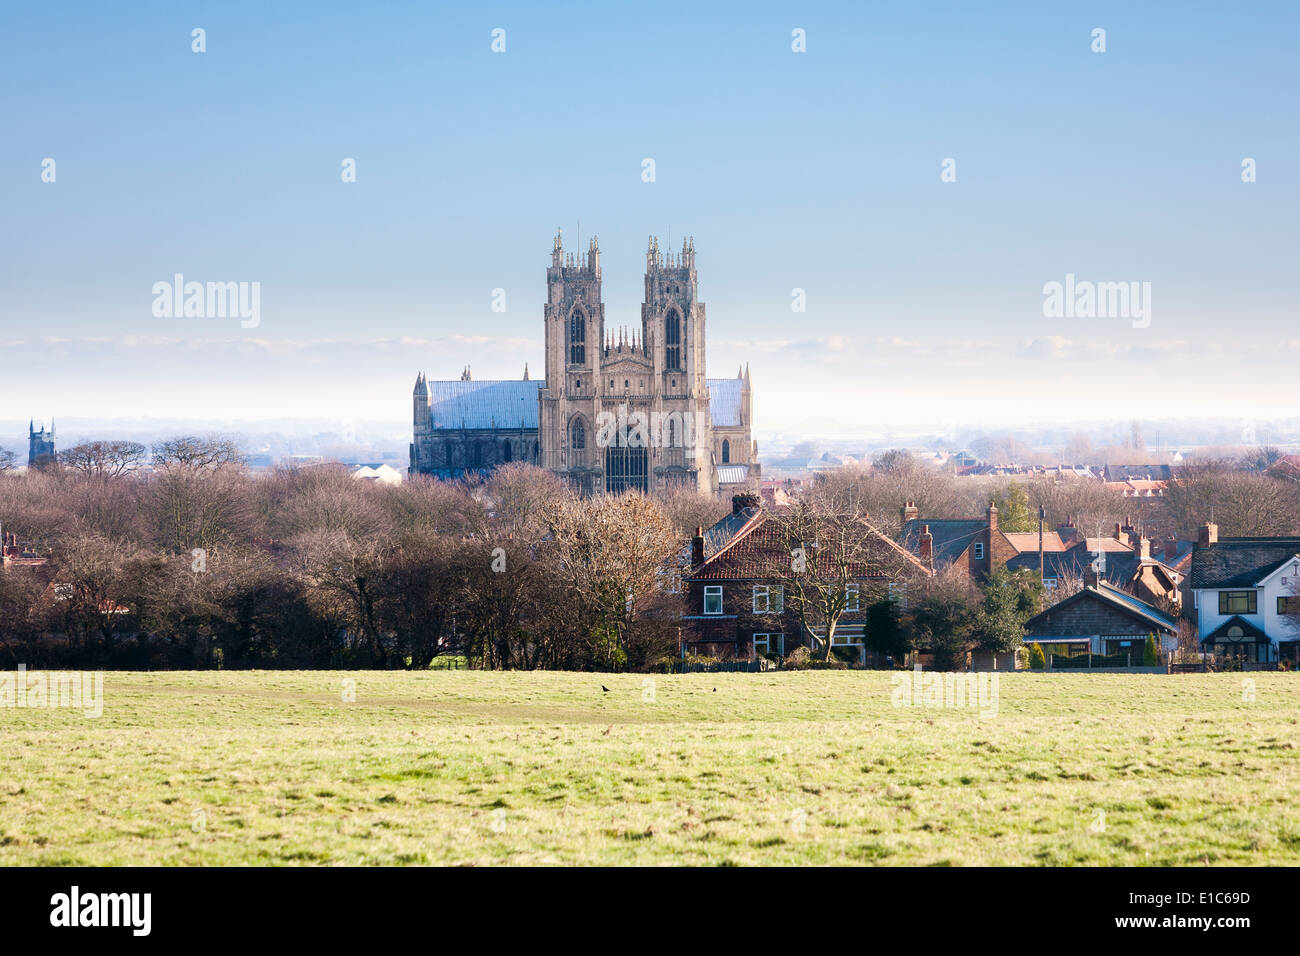 Beverley Minster church in Beverley, East Yorkshire, England, UK in winter Stock Photo